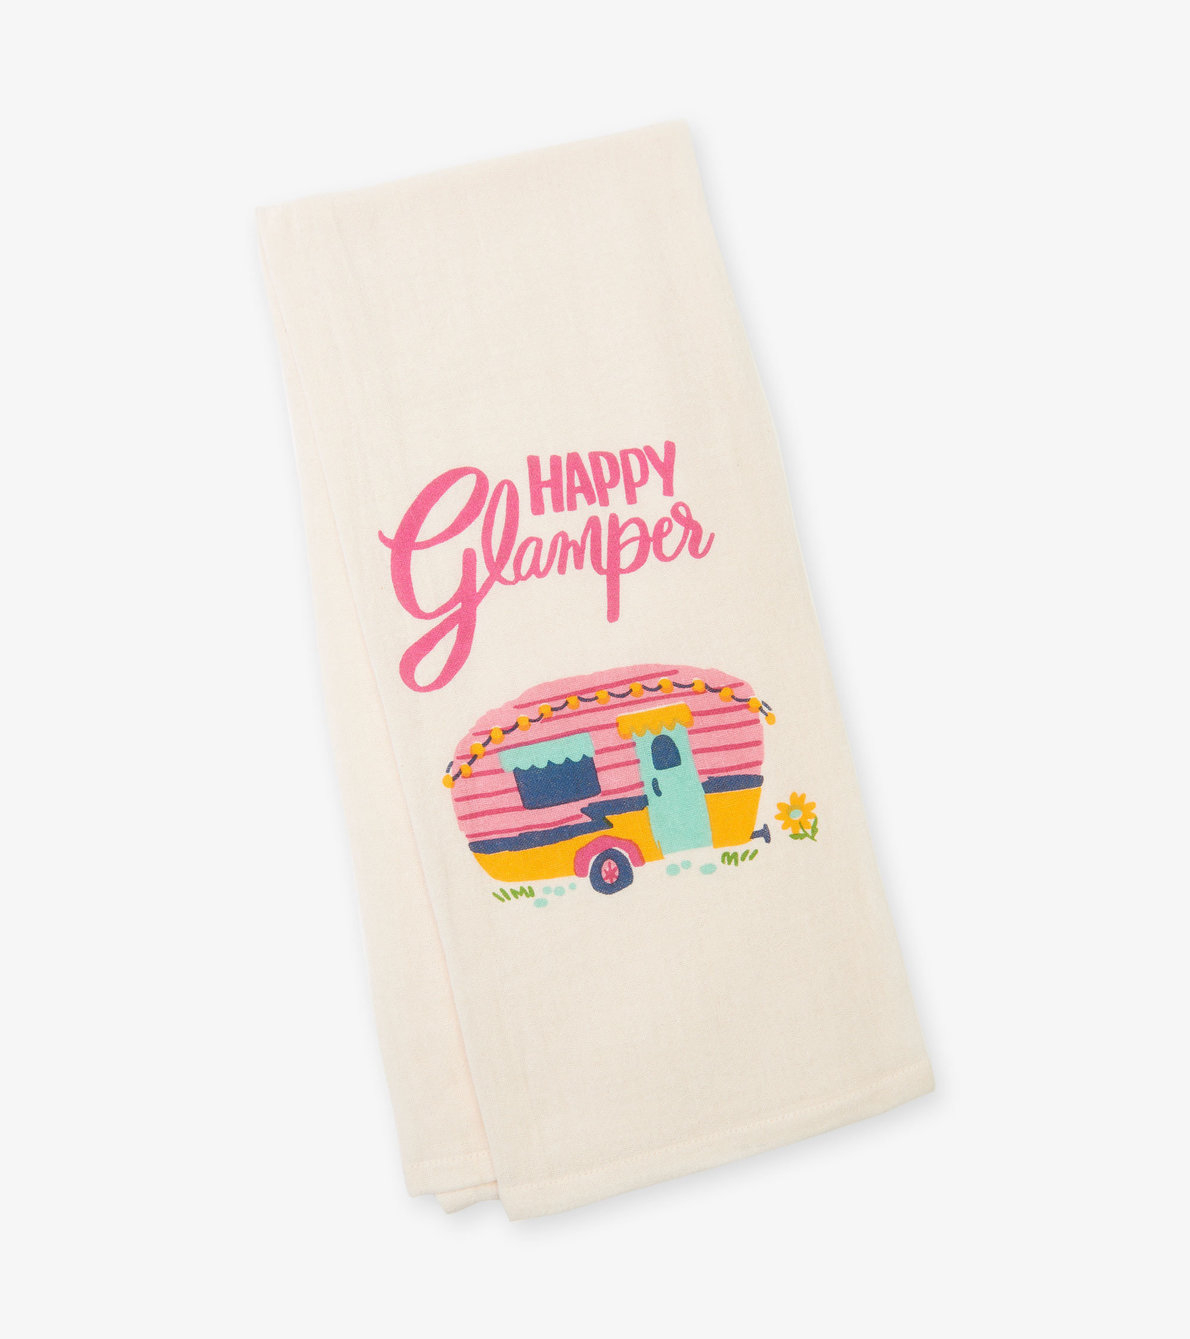 View larger image of Happy Glamper Tea Towel